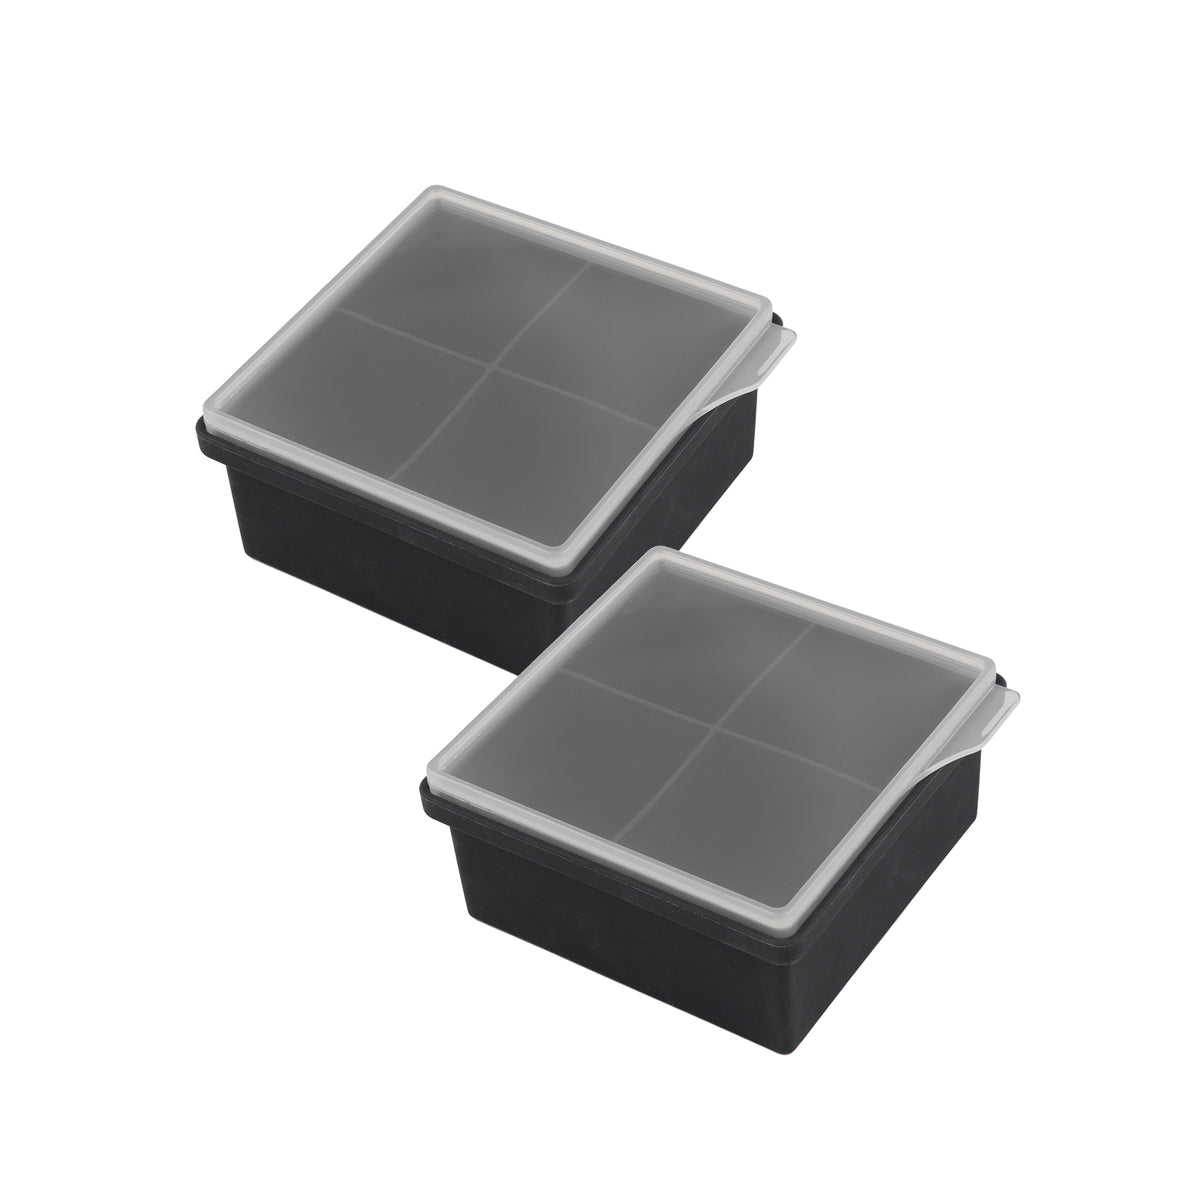 LOCK & LOCK Ice Cube Mould with Storage Box & Lid, 4-piece Set - Plastic